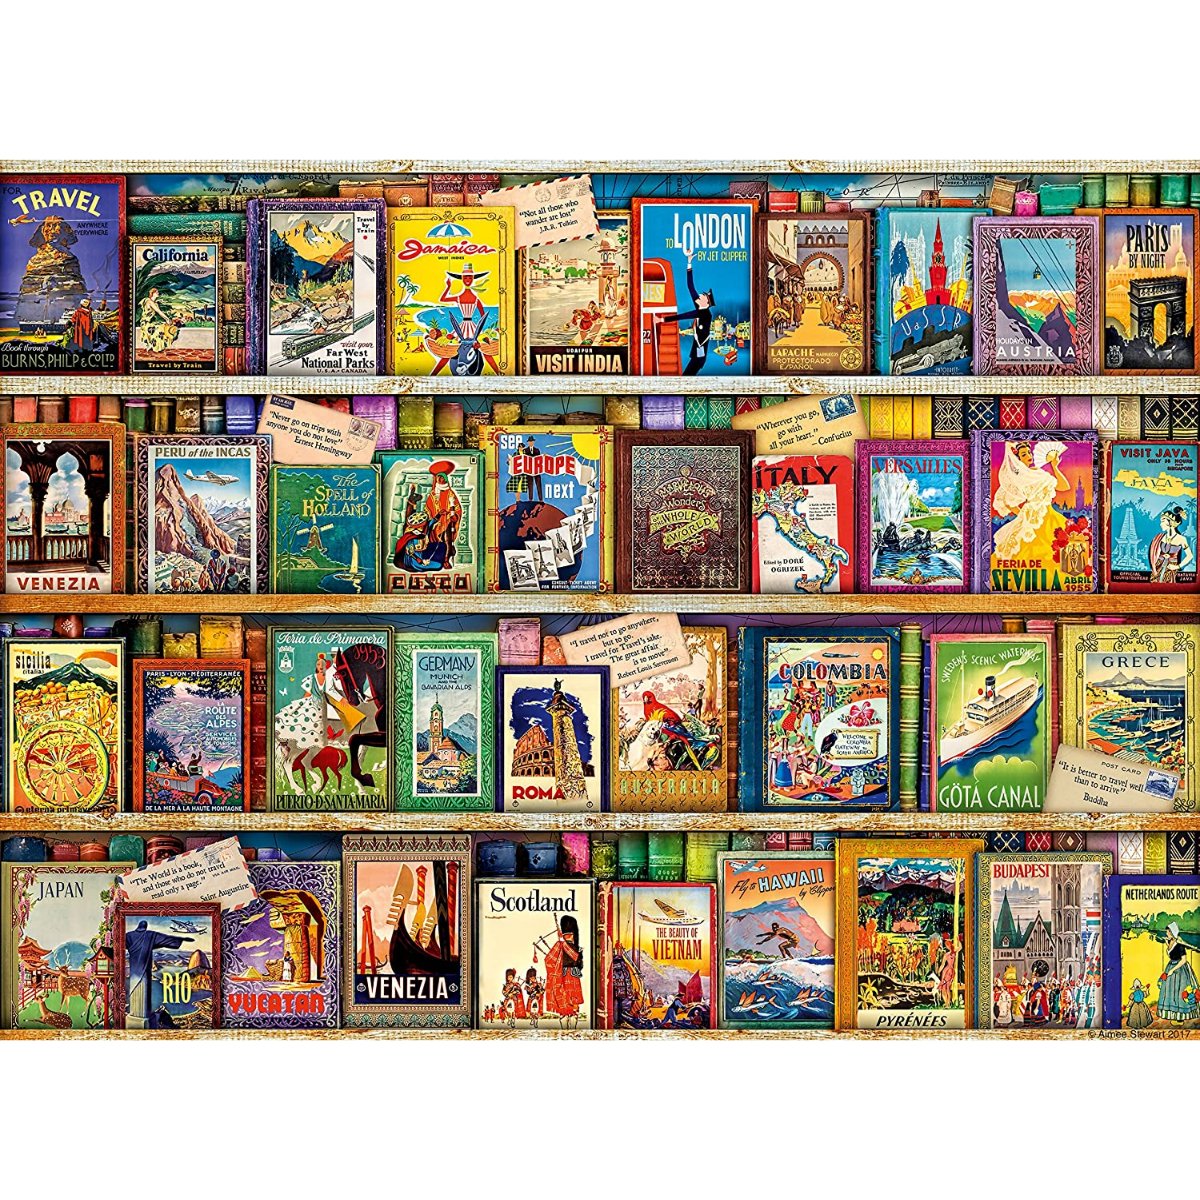 Ravensburger Vintage Travel Guides Jigsaw Puzzle (500 Pieces) - Phillips Hobbies